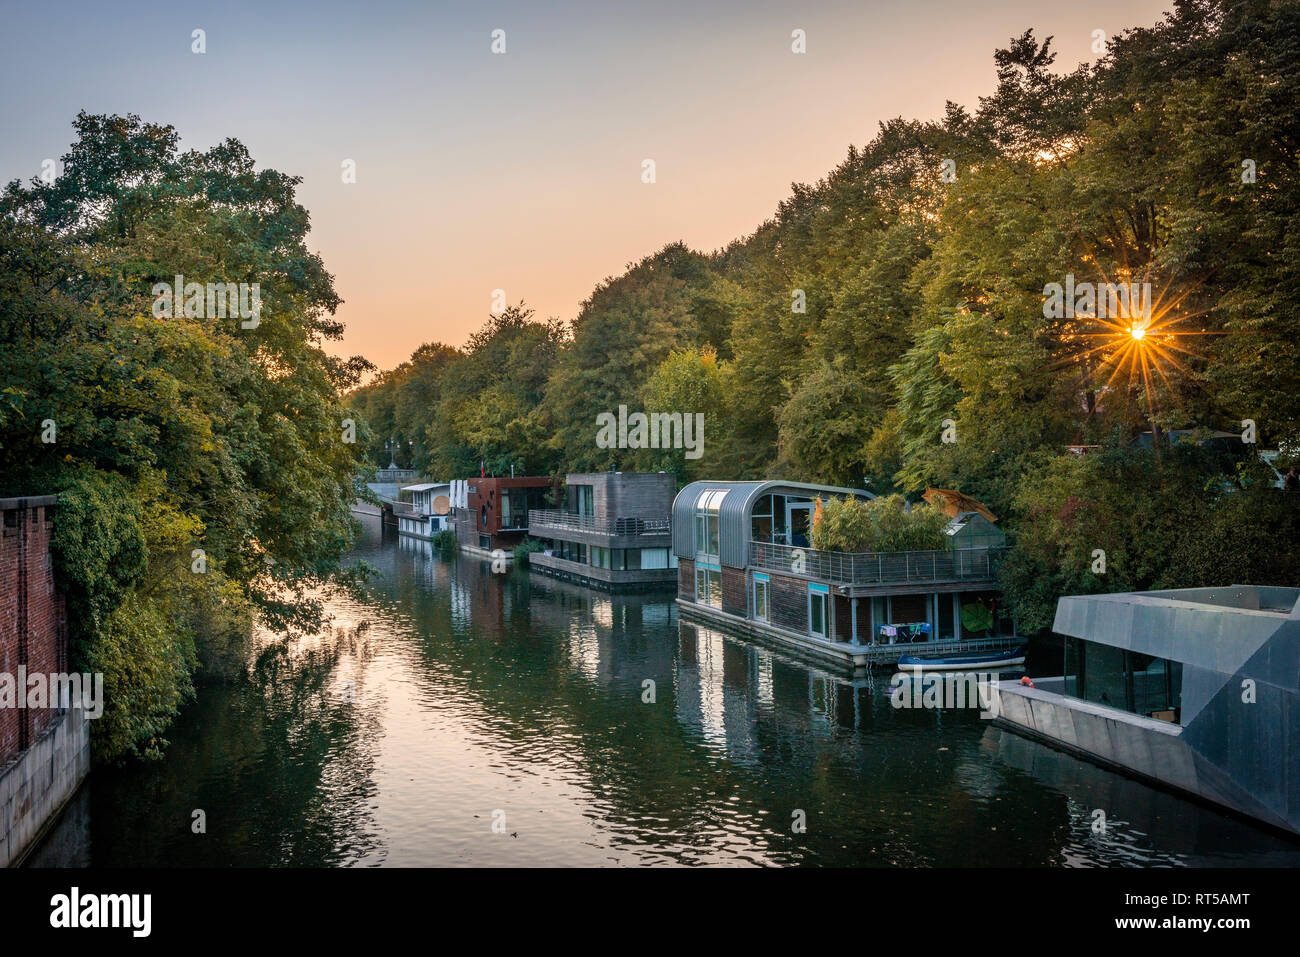 Germania, Amburgo, Hoseboats su Elba canal Foto Stock